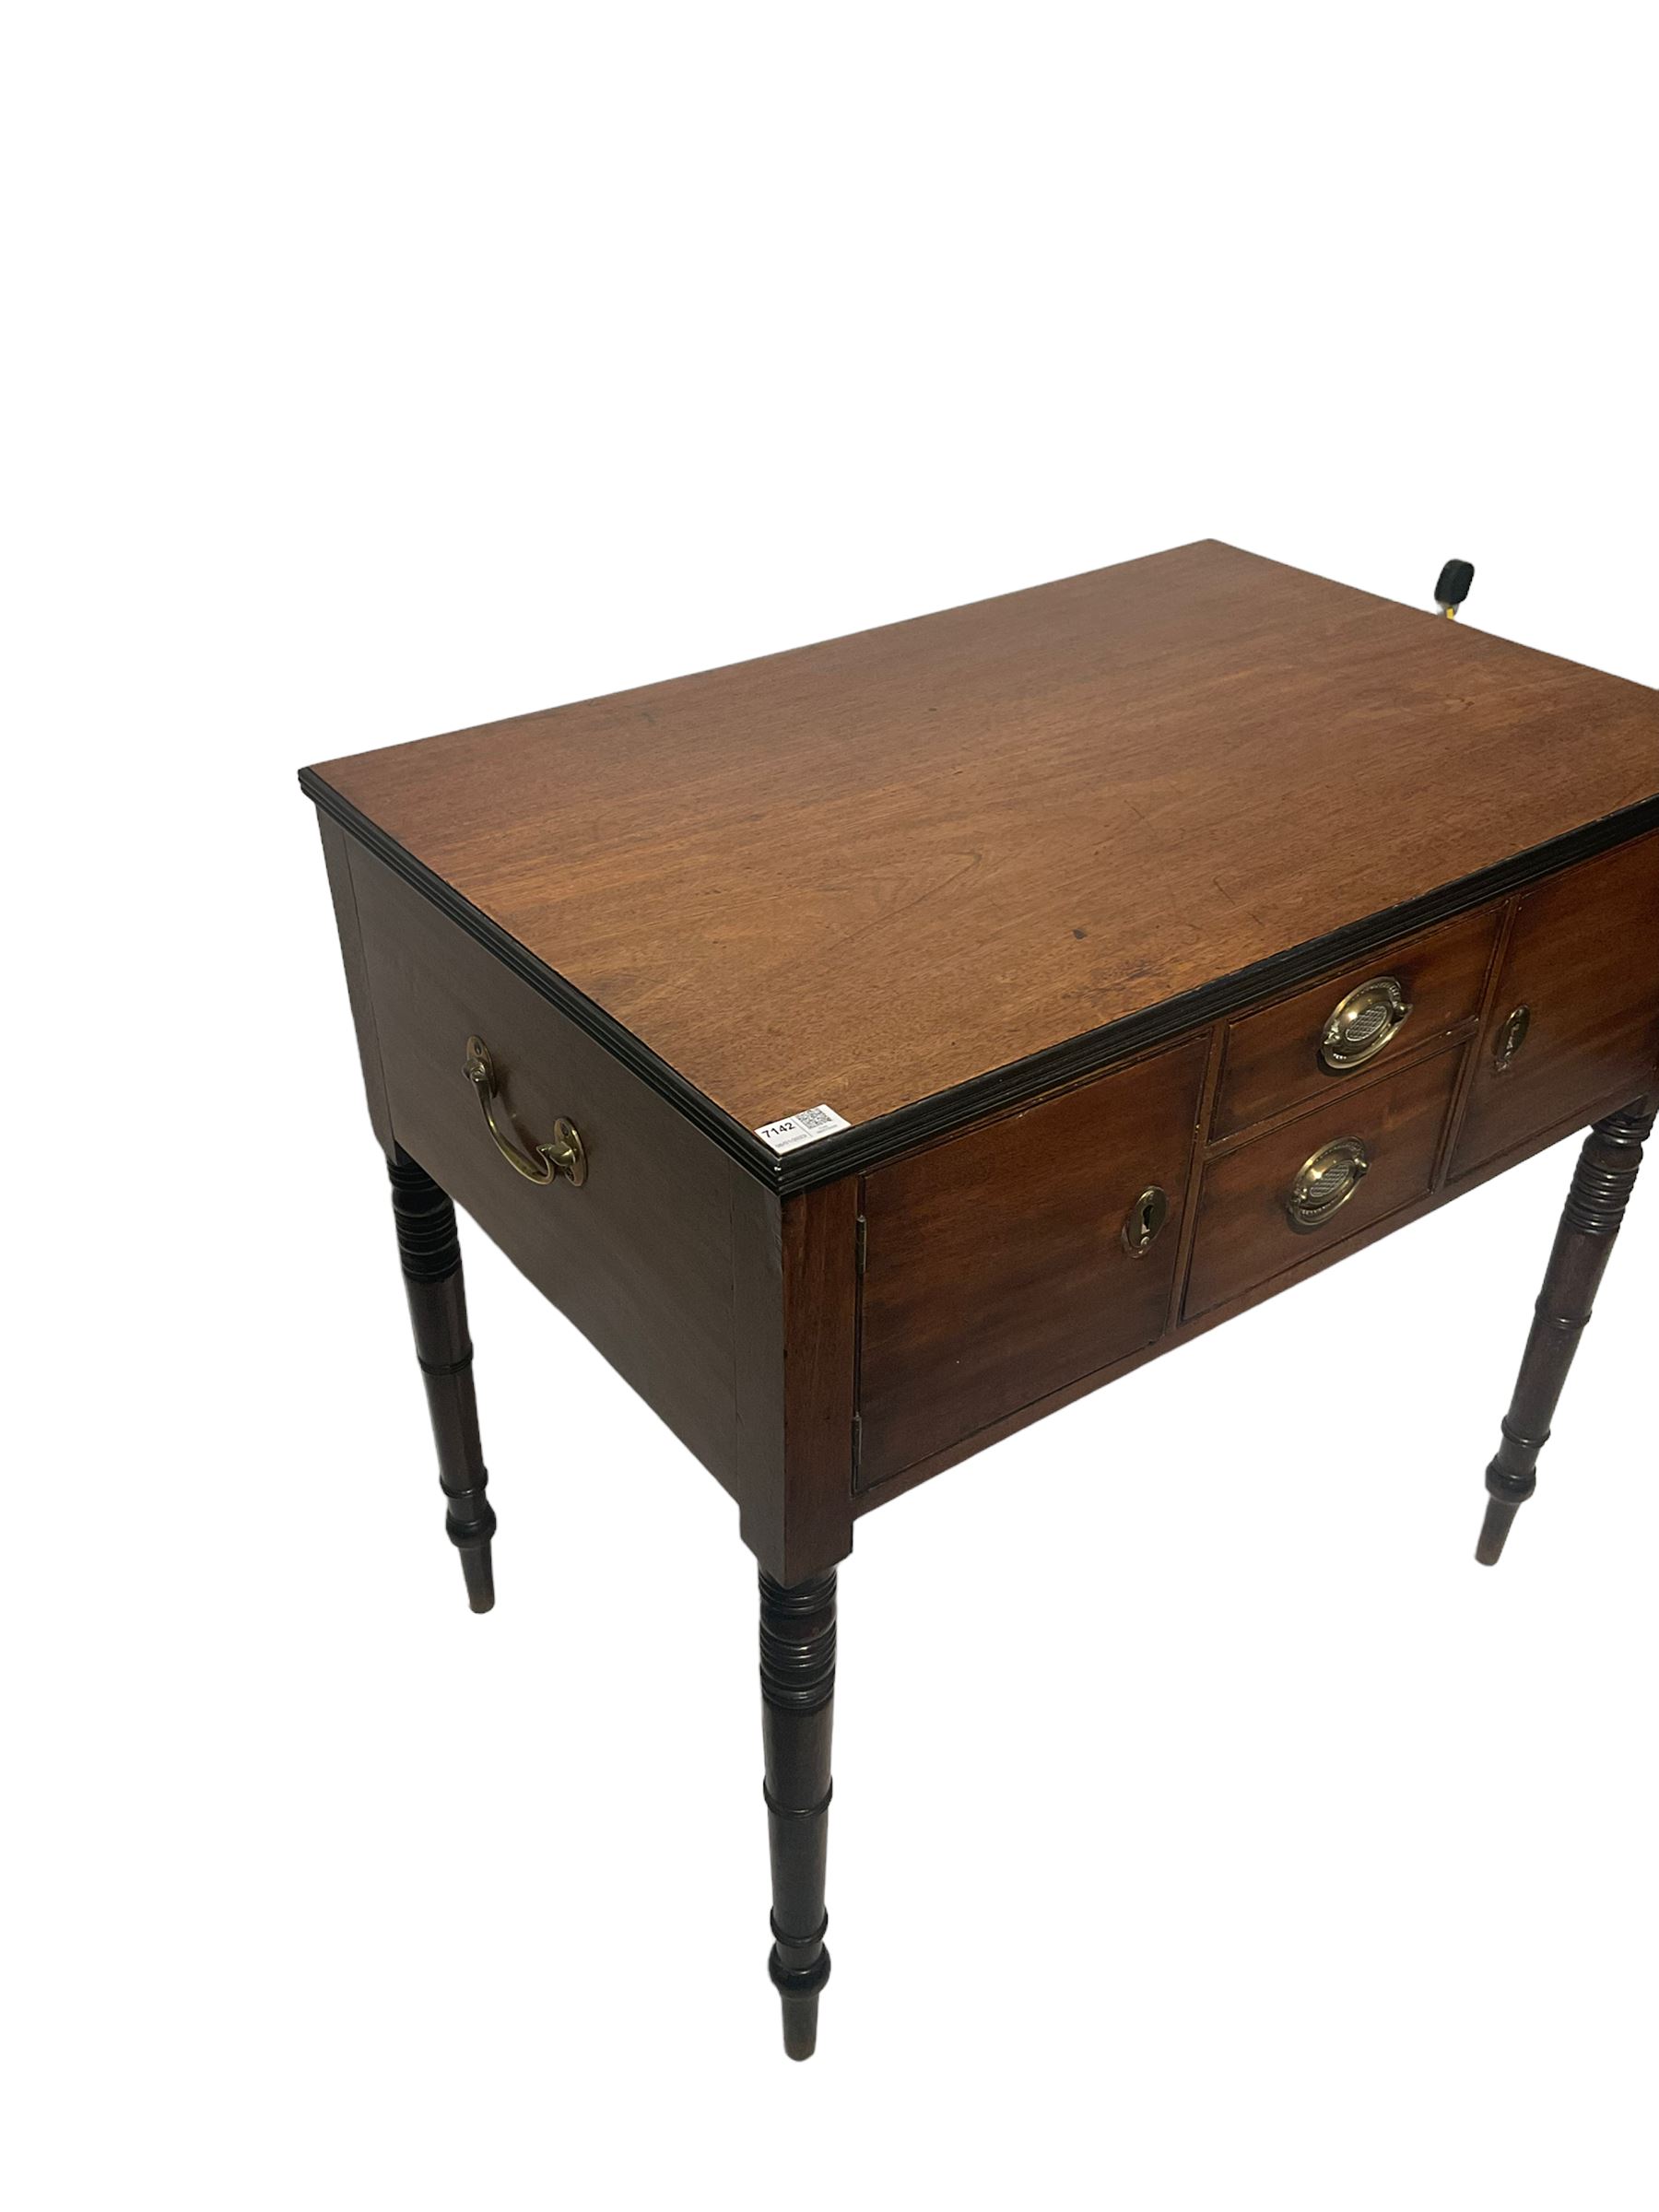 19th century mahogany side table - Image 2 of 5